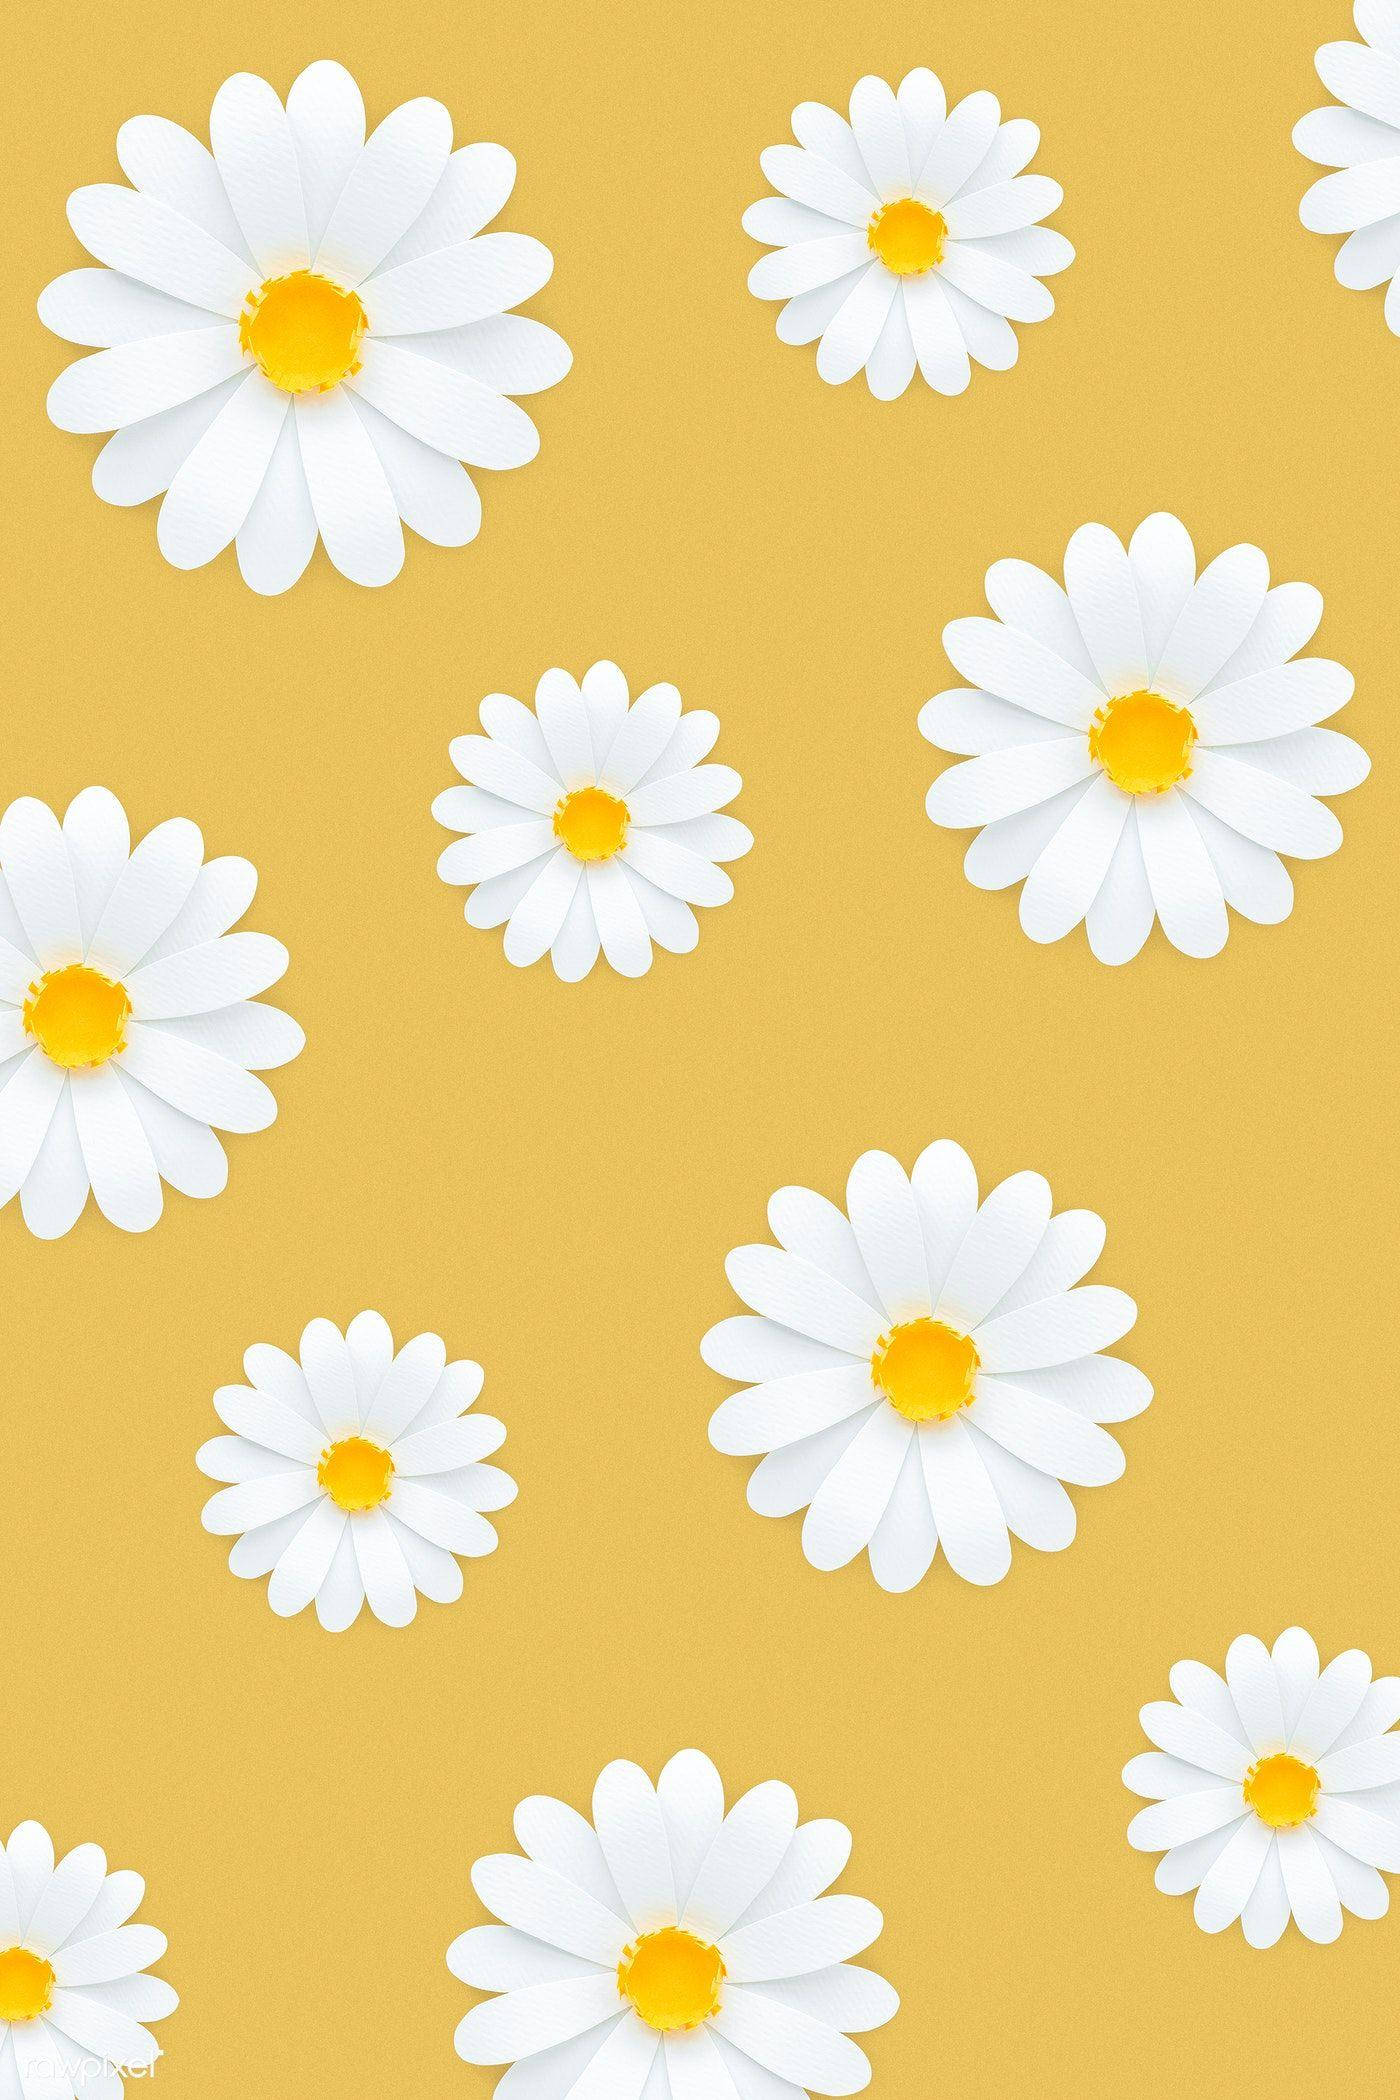 A pattern of white daisies on yellow - Light yellow, daisy